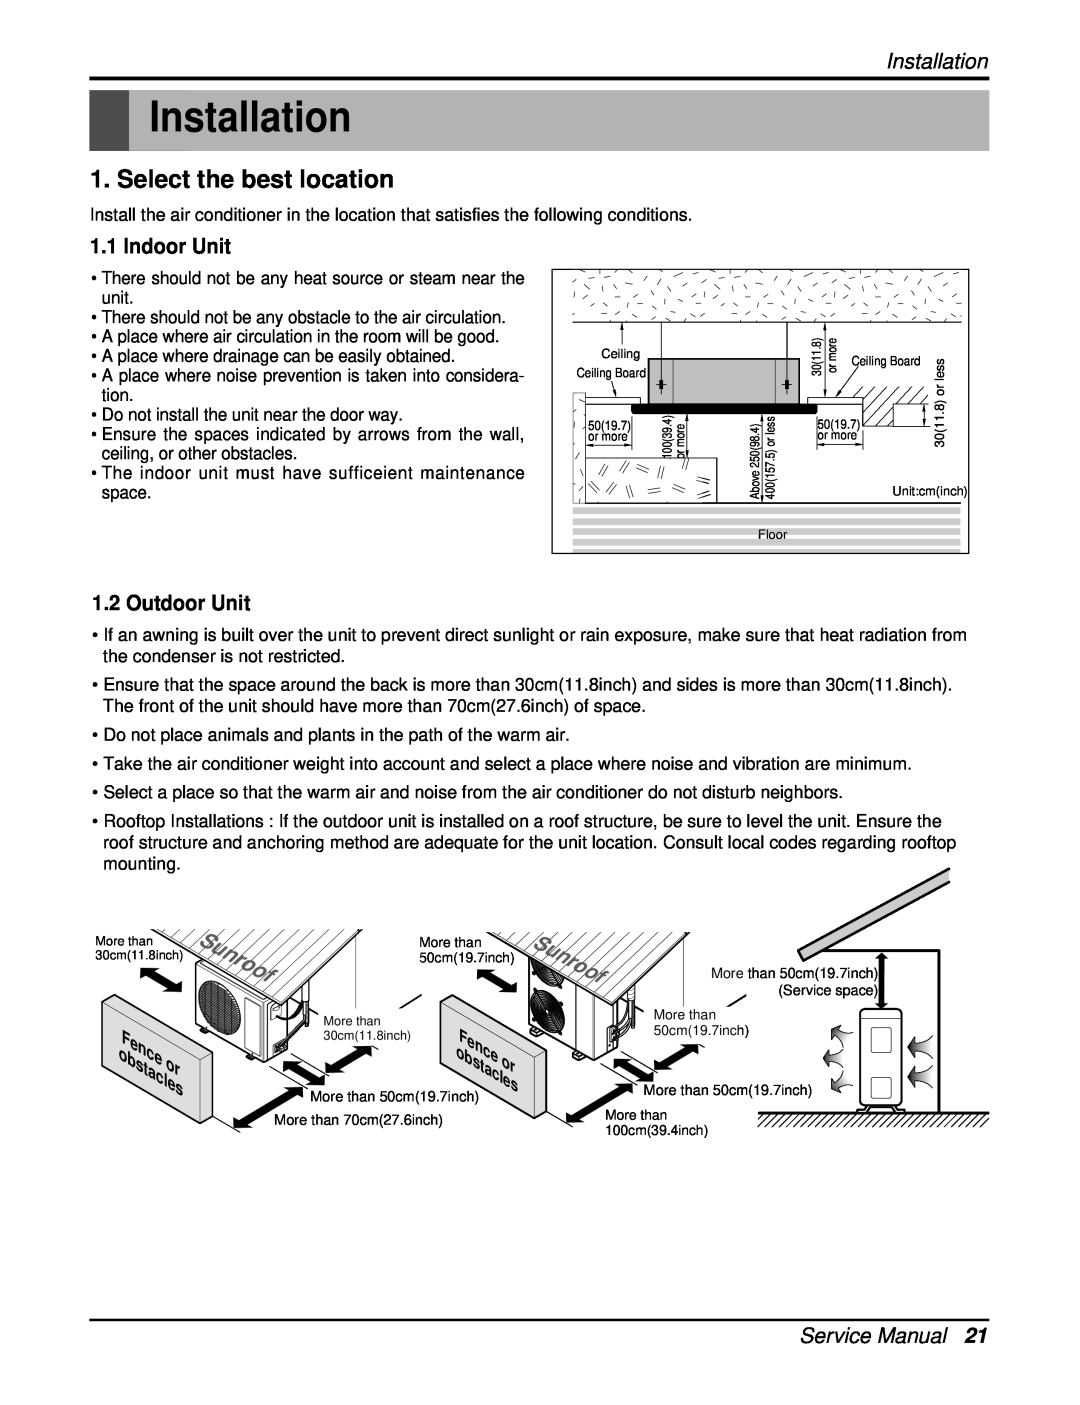 Heat Controller DMC36CA-1, DMC24CA-1 manual Installation, Select the best location, Sunroof 